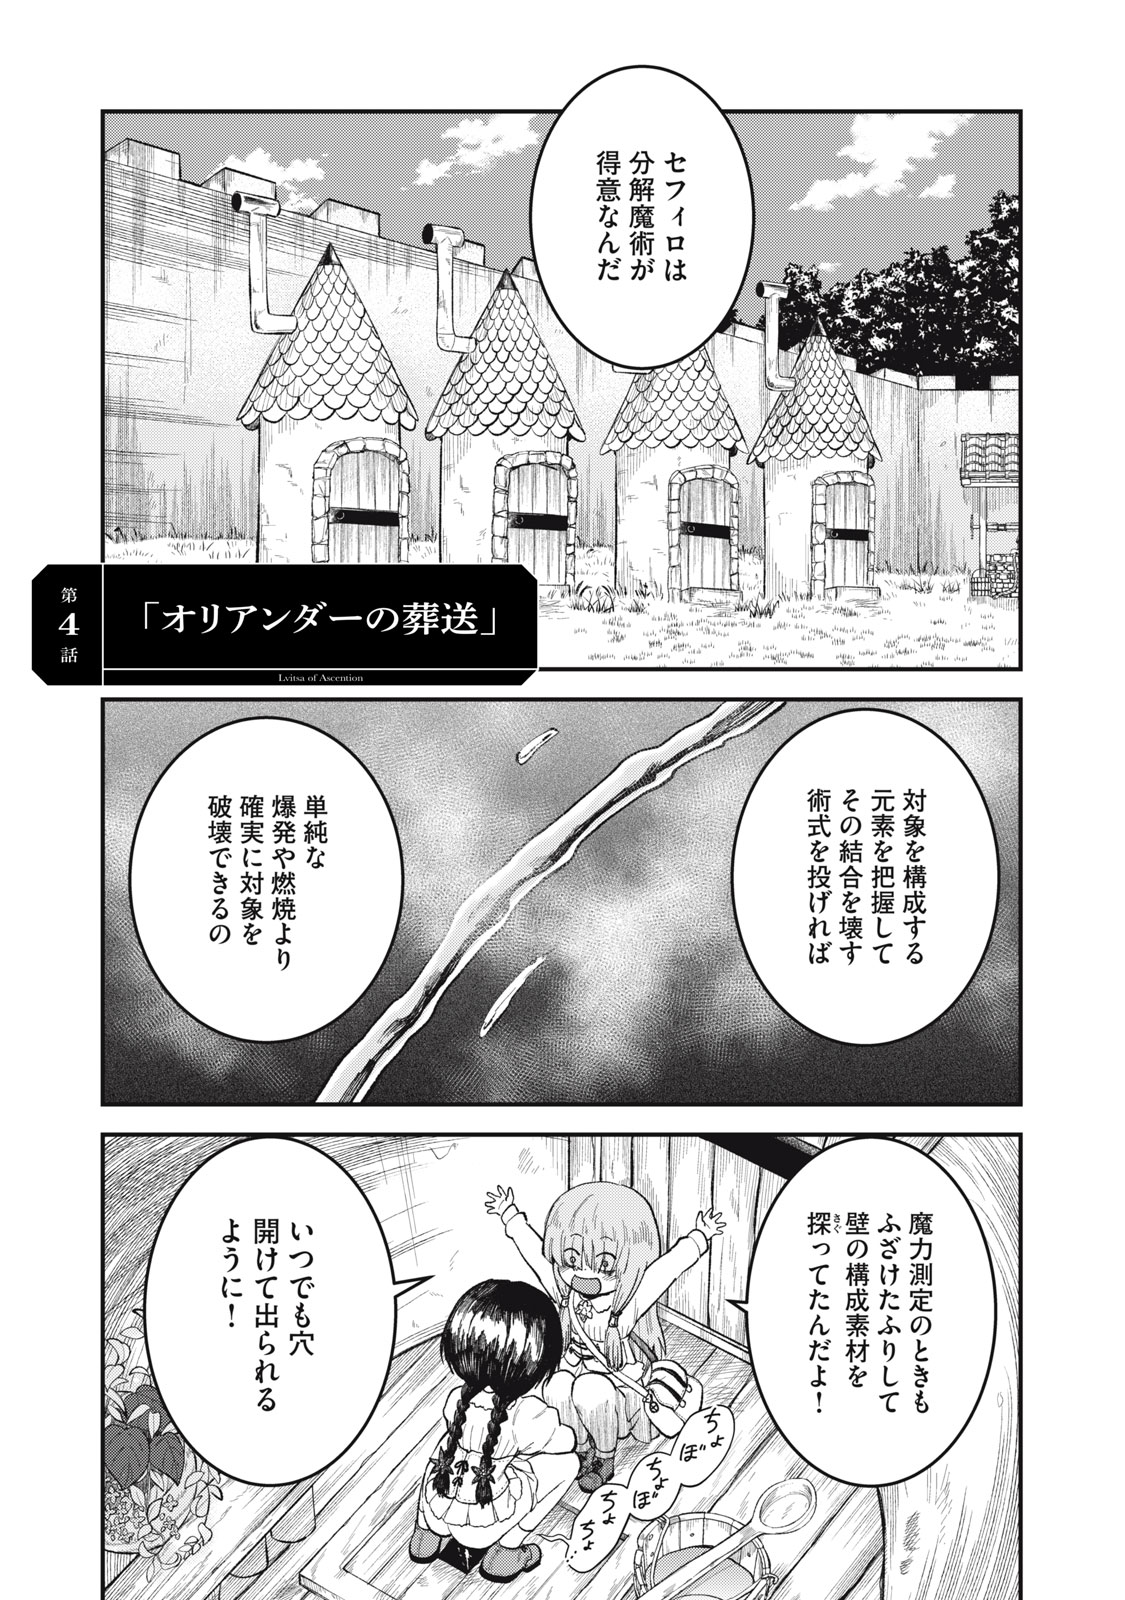 Itadaki no Lvitsa - Chapter 4 - Page 2